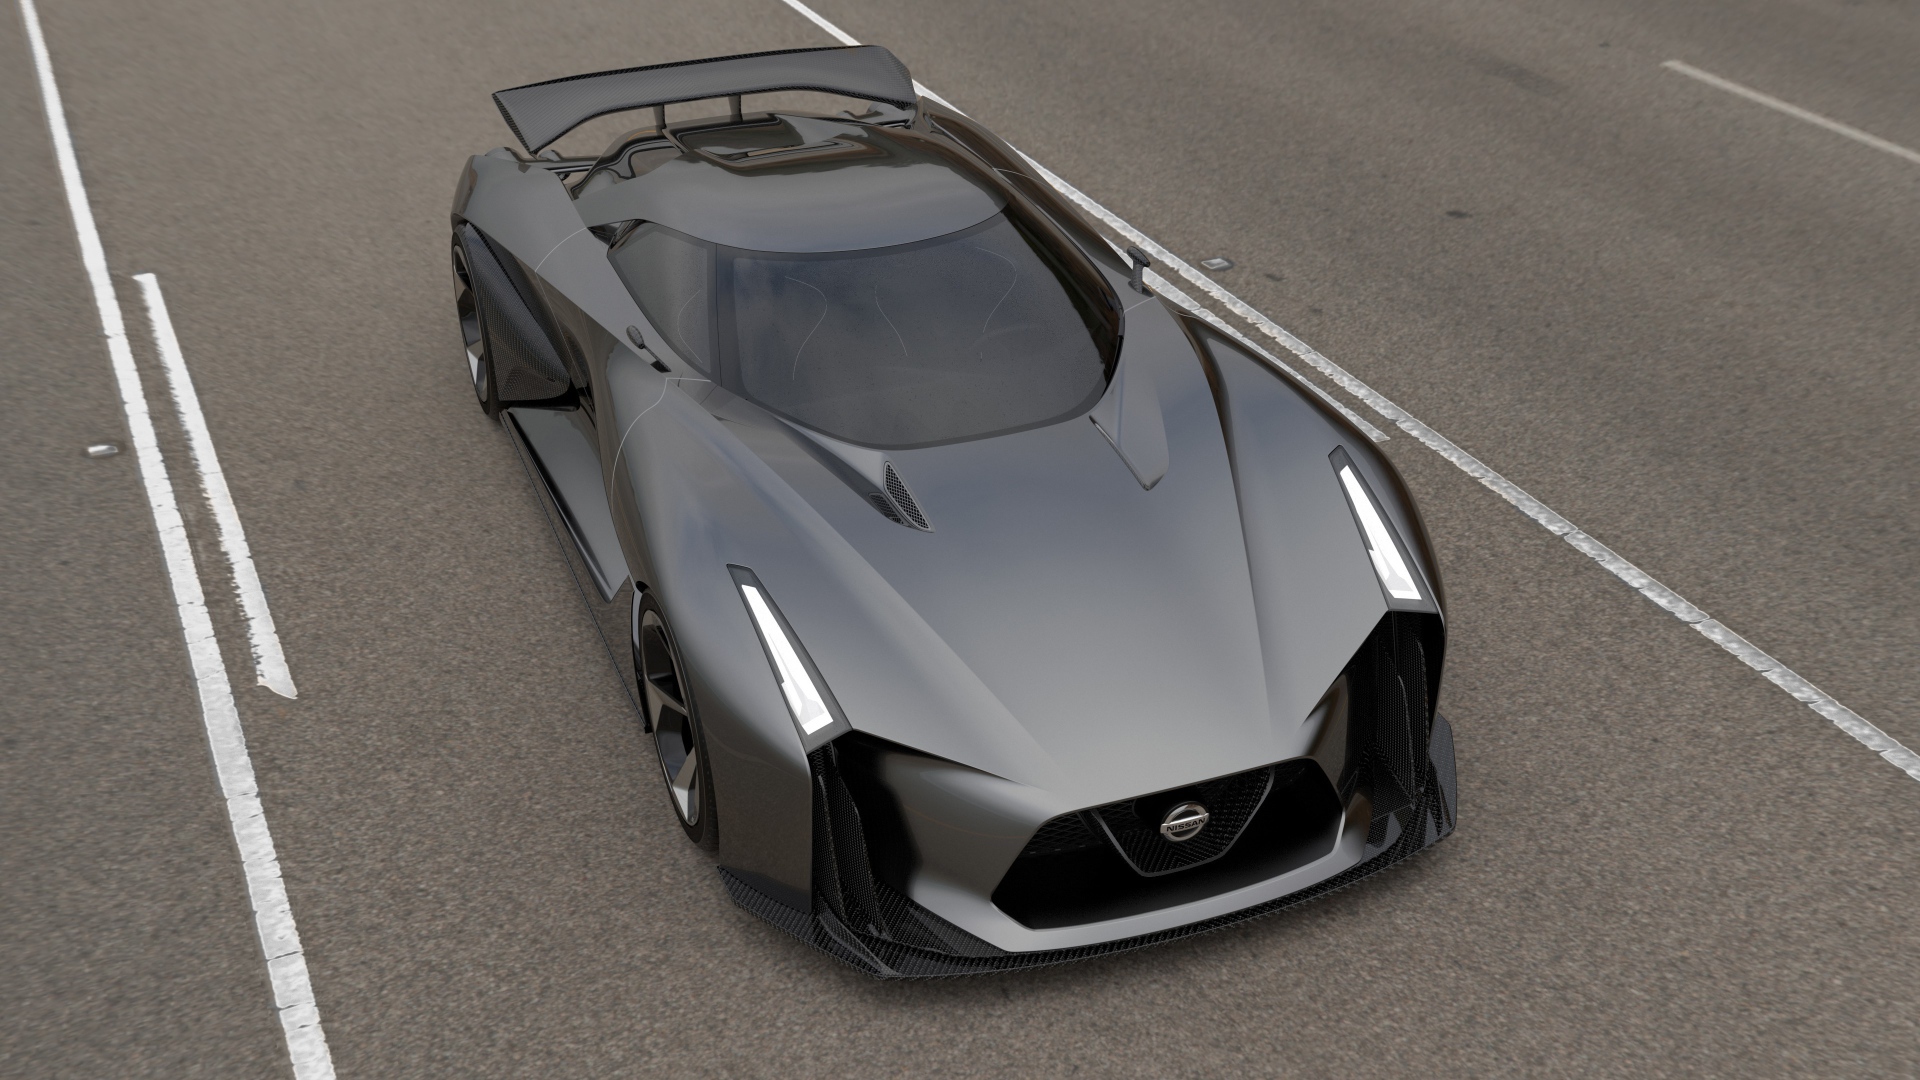 Черный суперкар Nissan Concept 2020